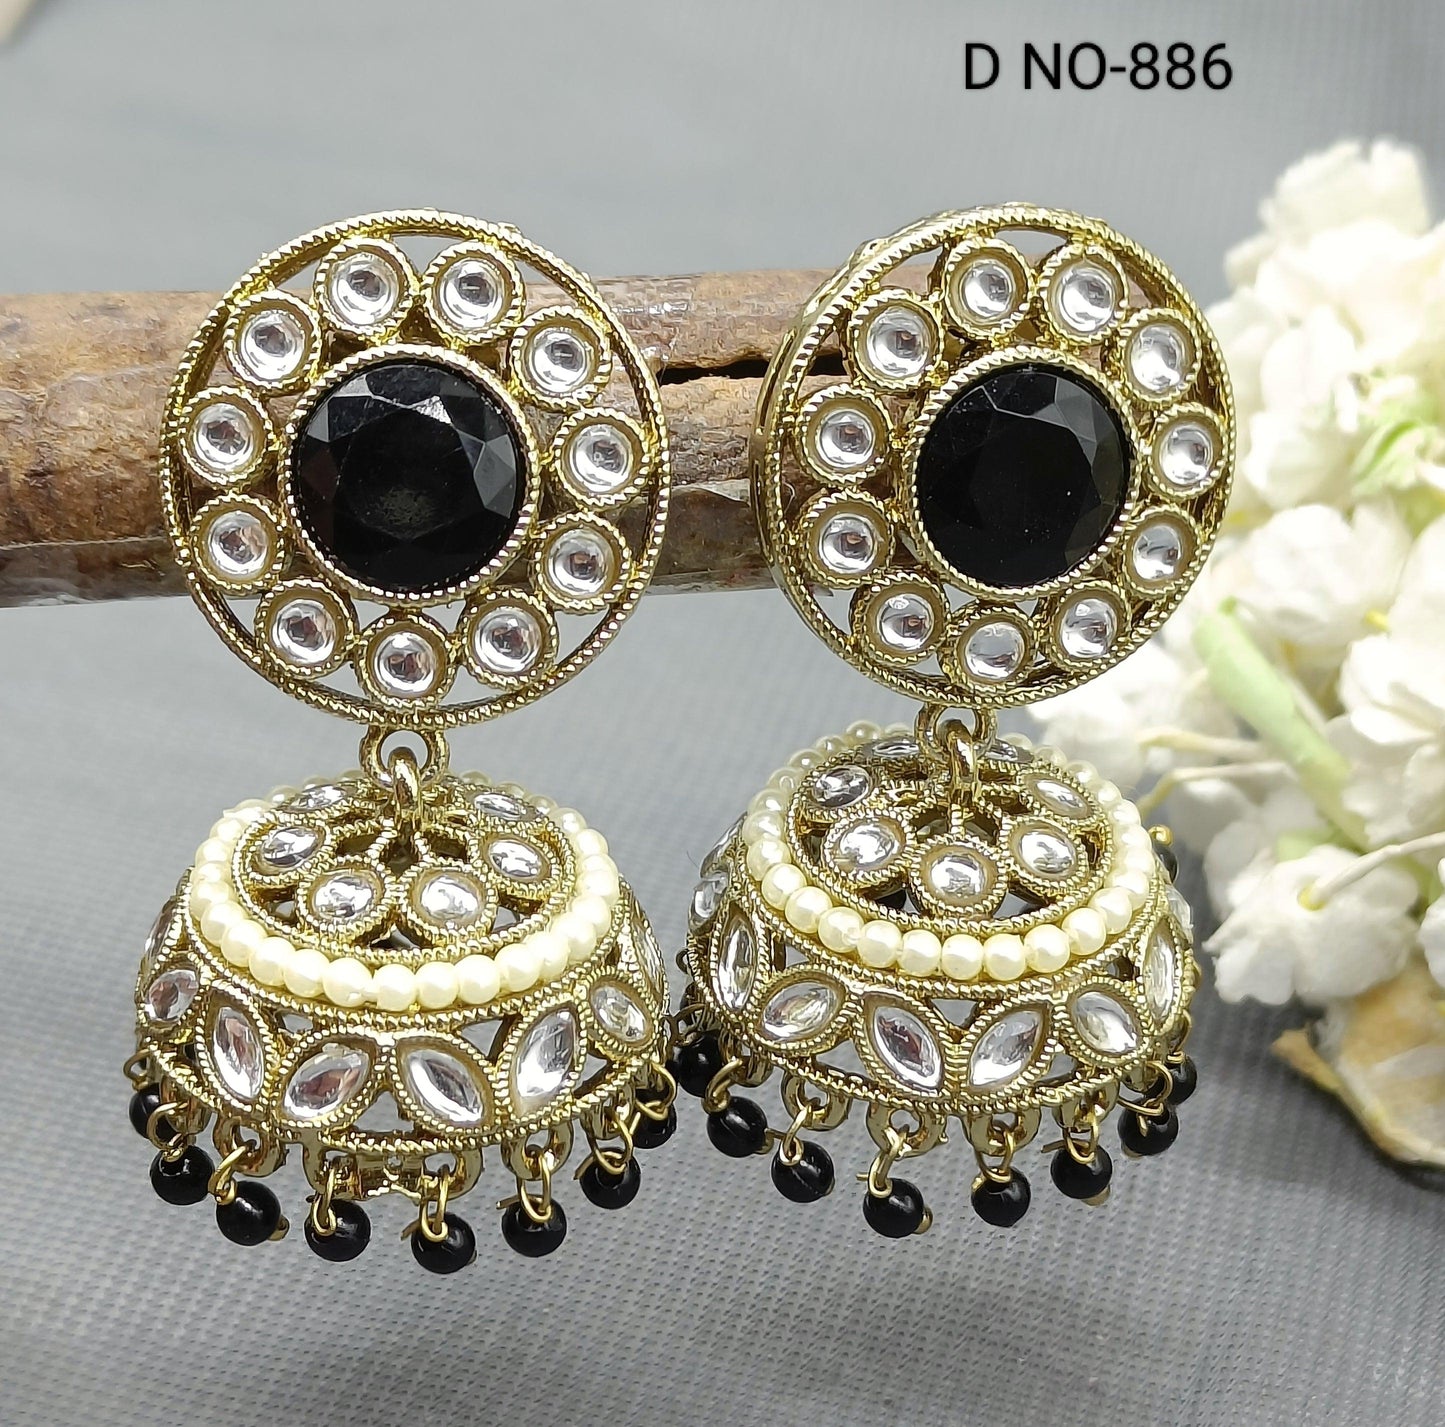 Antique Golden Kundan Jhumki Earrings Sku-886 A4 - rchiecreation